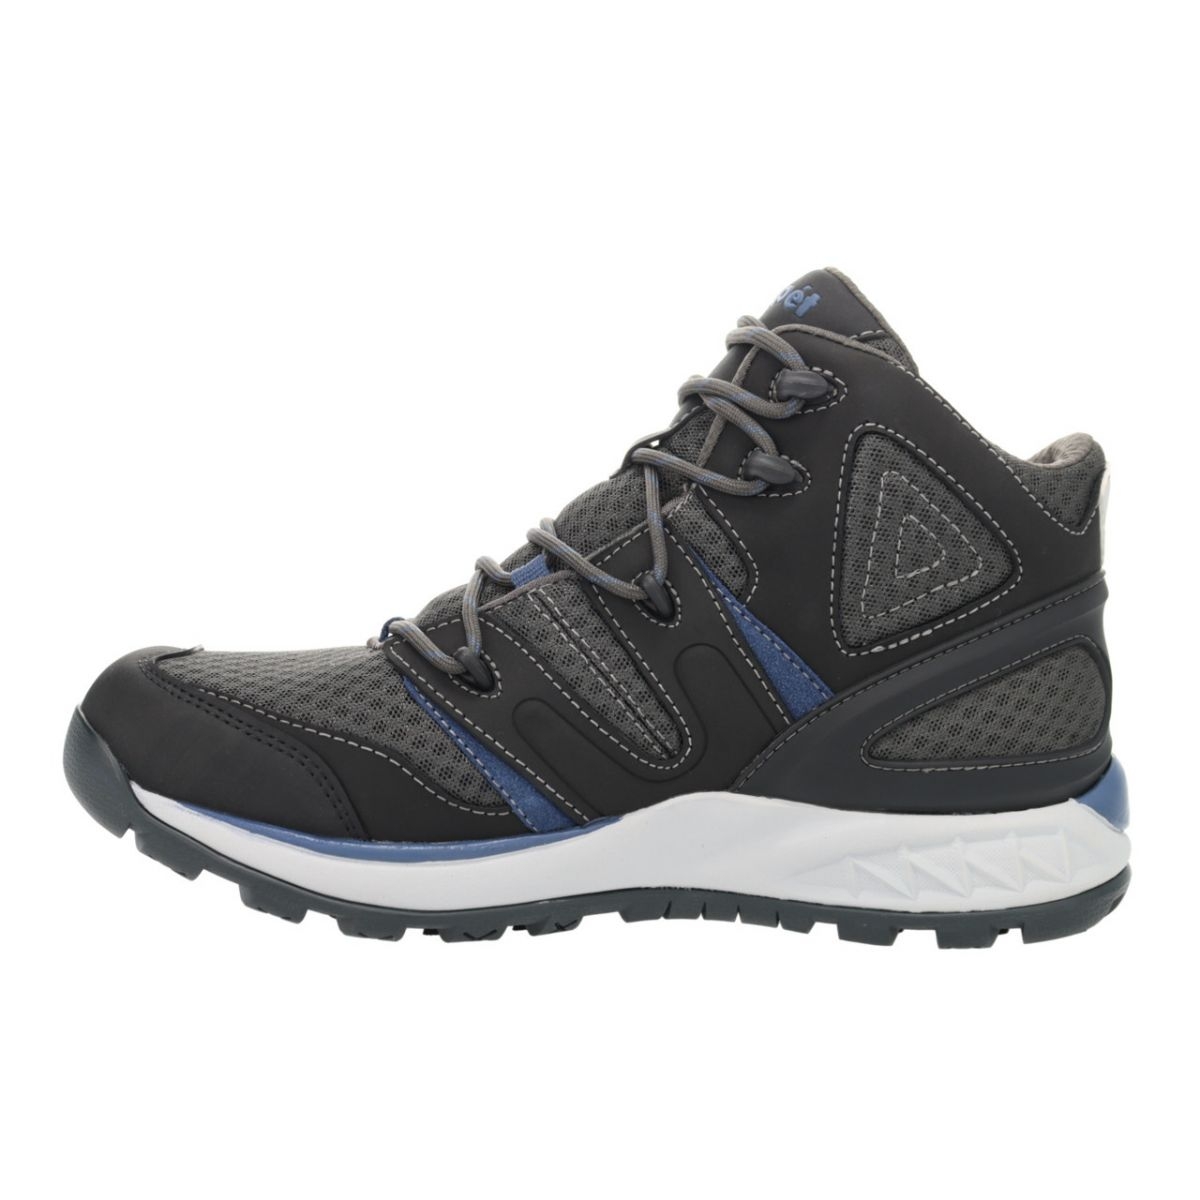 Propet Men's Veymont Waterproof Hiking Boot Grey/Blue - MOA022SGRB GREY/BLUE - GREY/BLUE, 13 XX-Wide